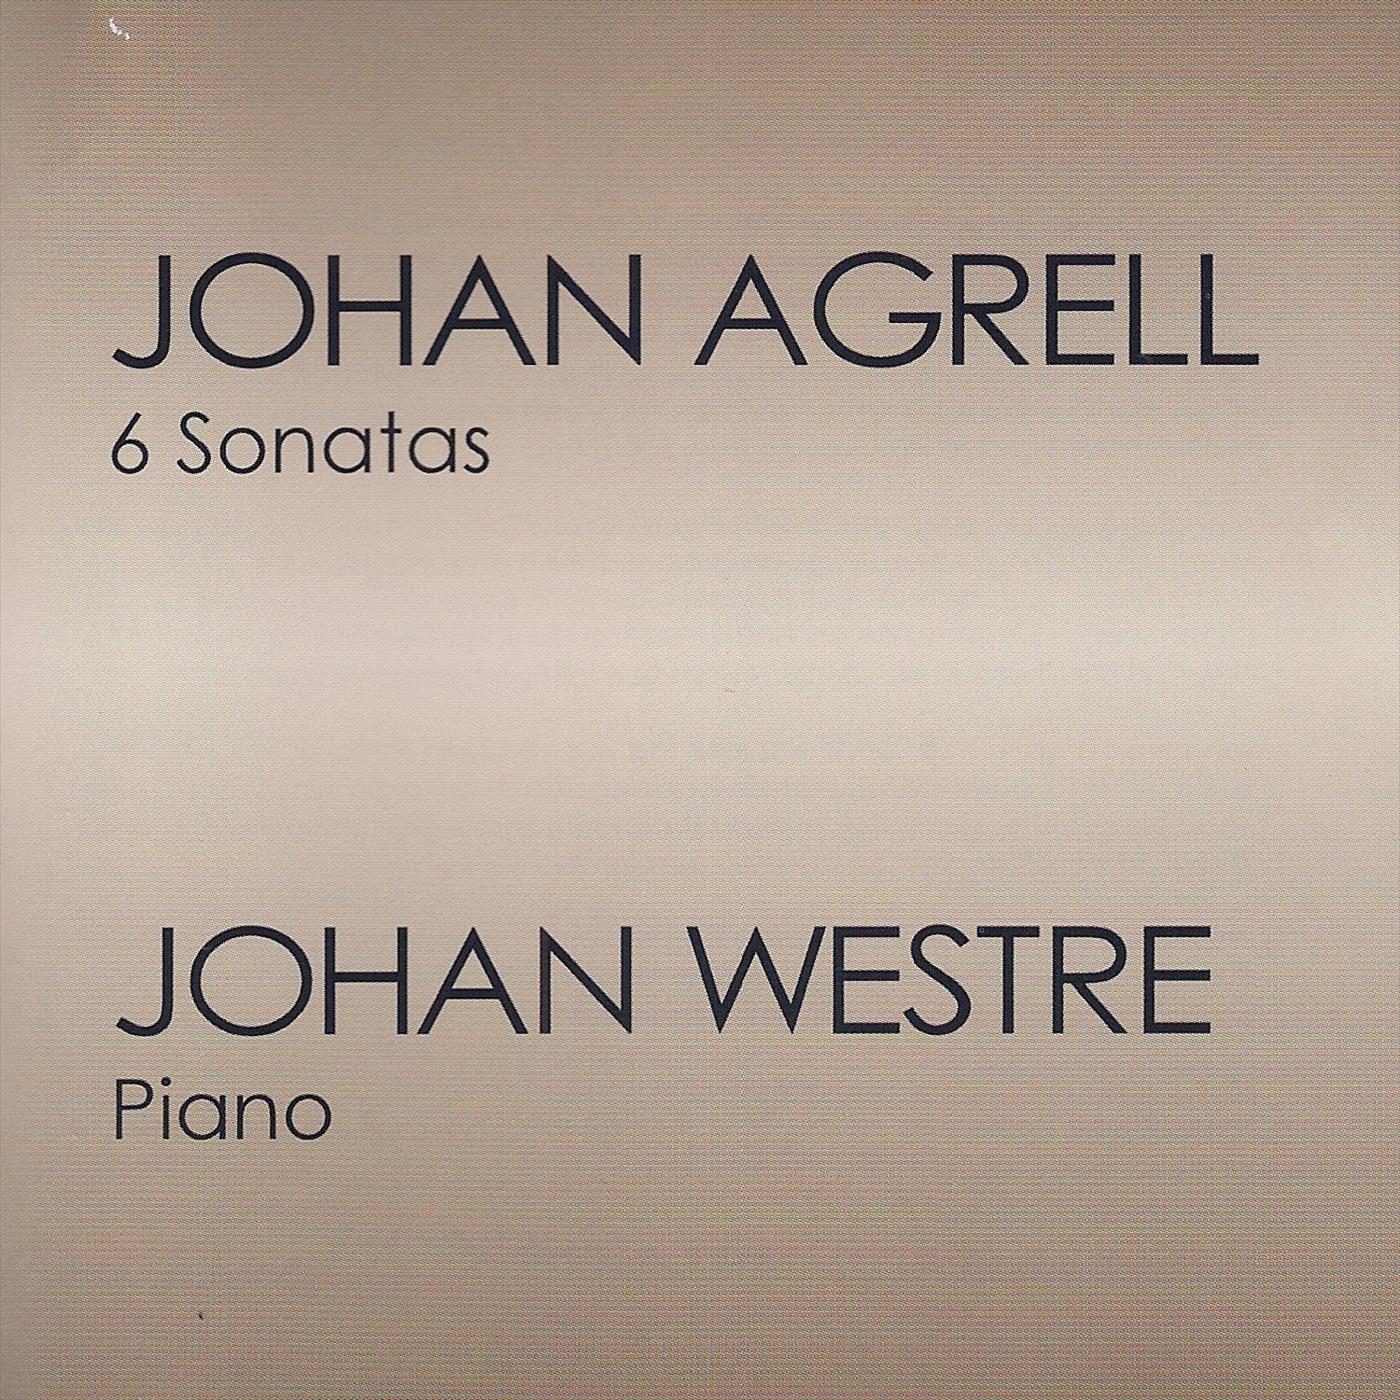 Johan Agrell 6 Sonatas